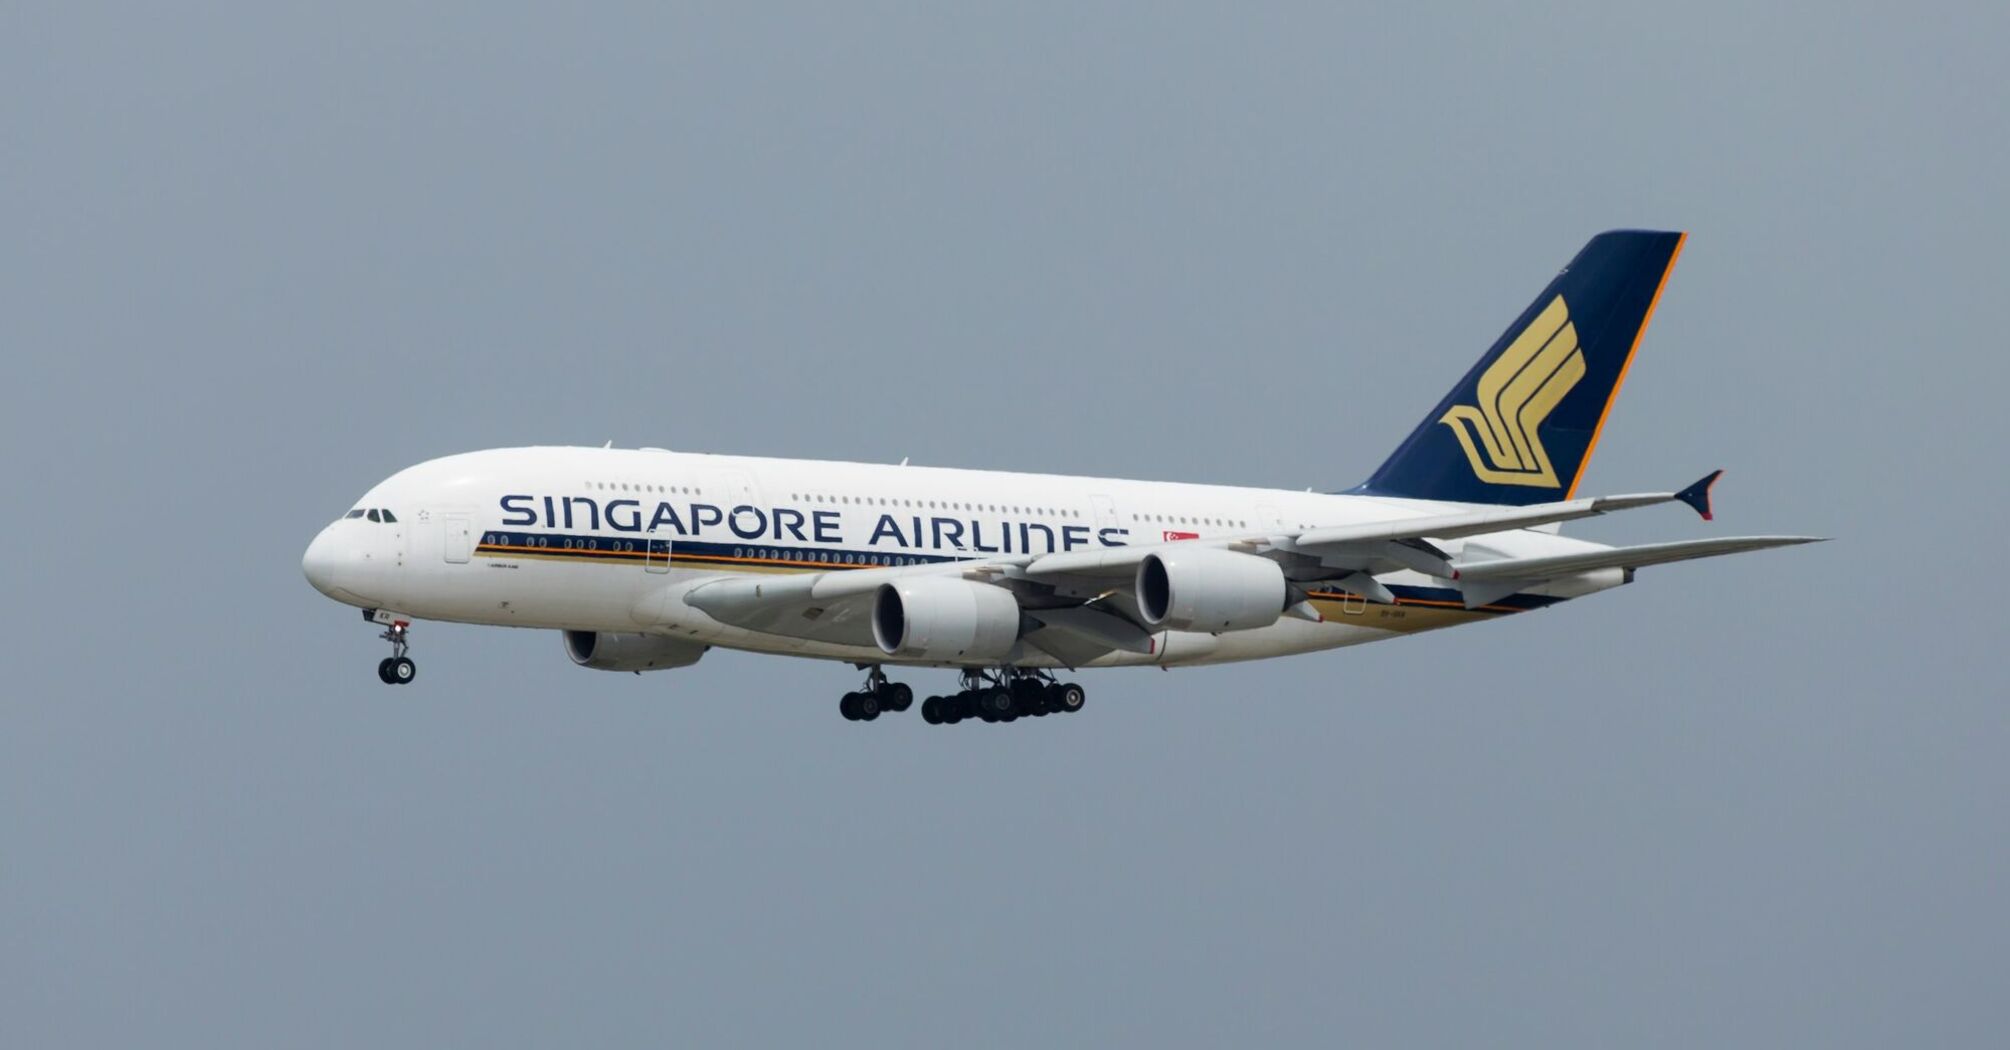 Singapore Airlines plane in flight